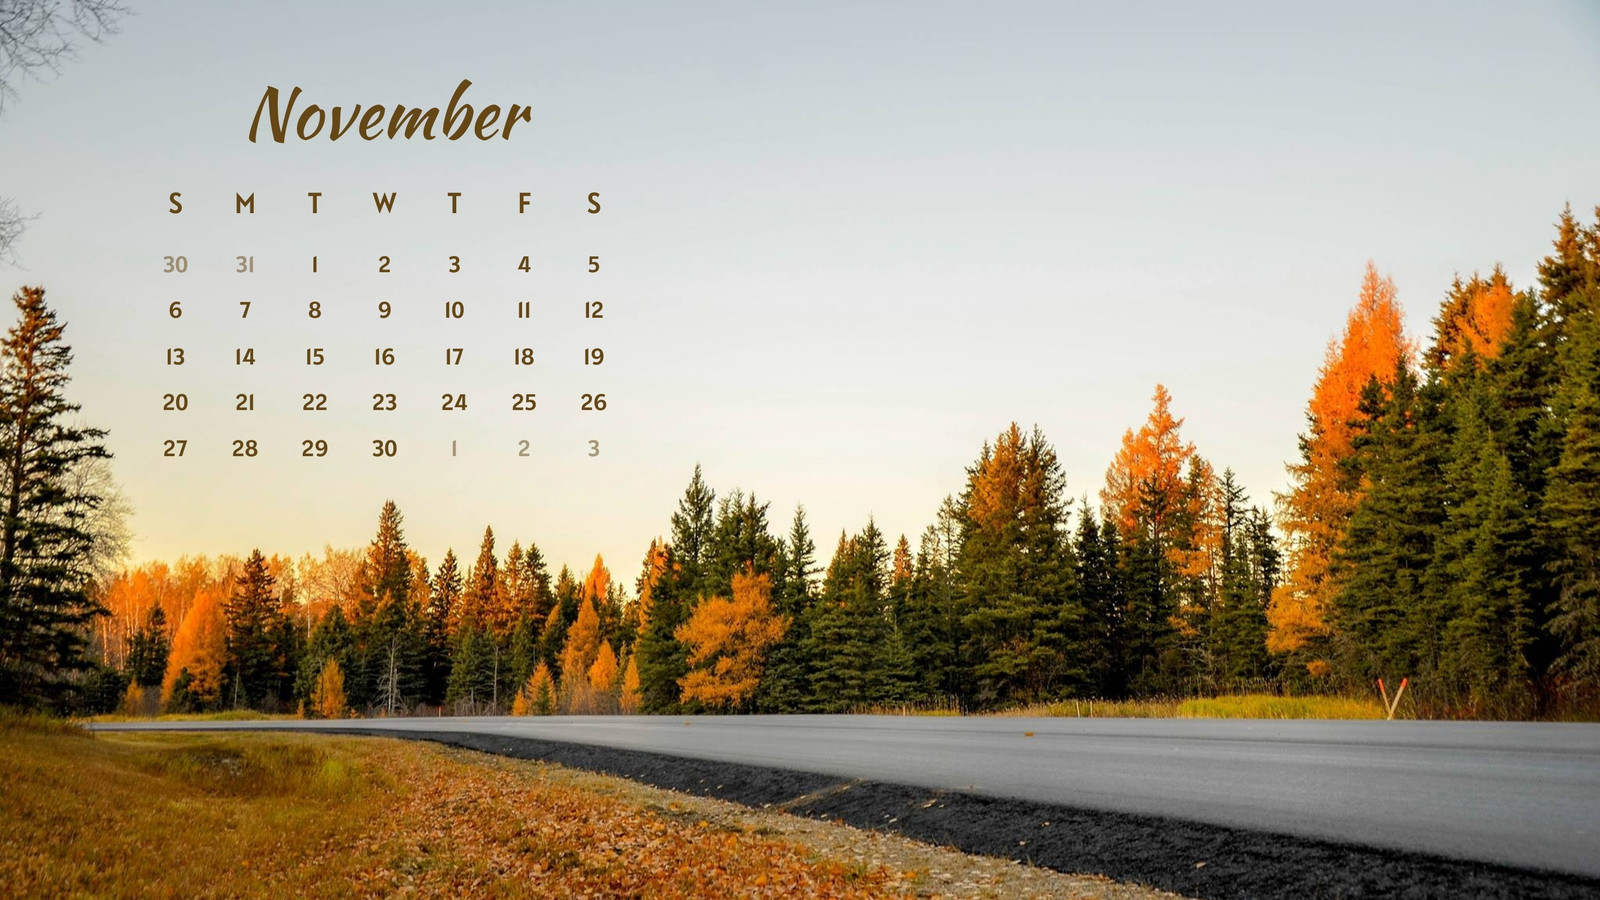 November Calendar Mobile Wallpaper Romantic Bouquet Background Wallpaper  Image For Free Download  Pngtree